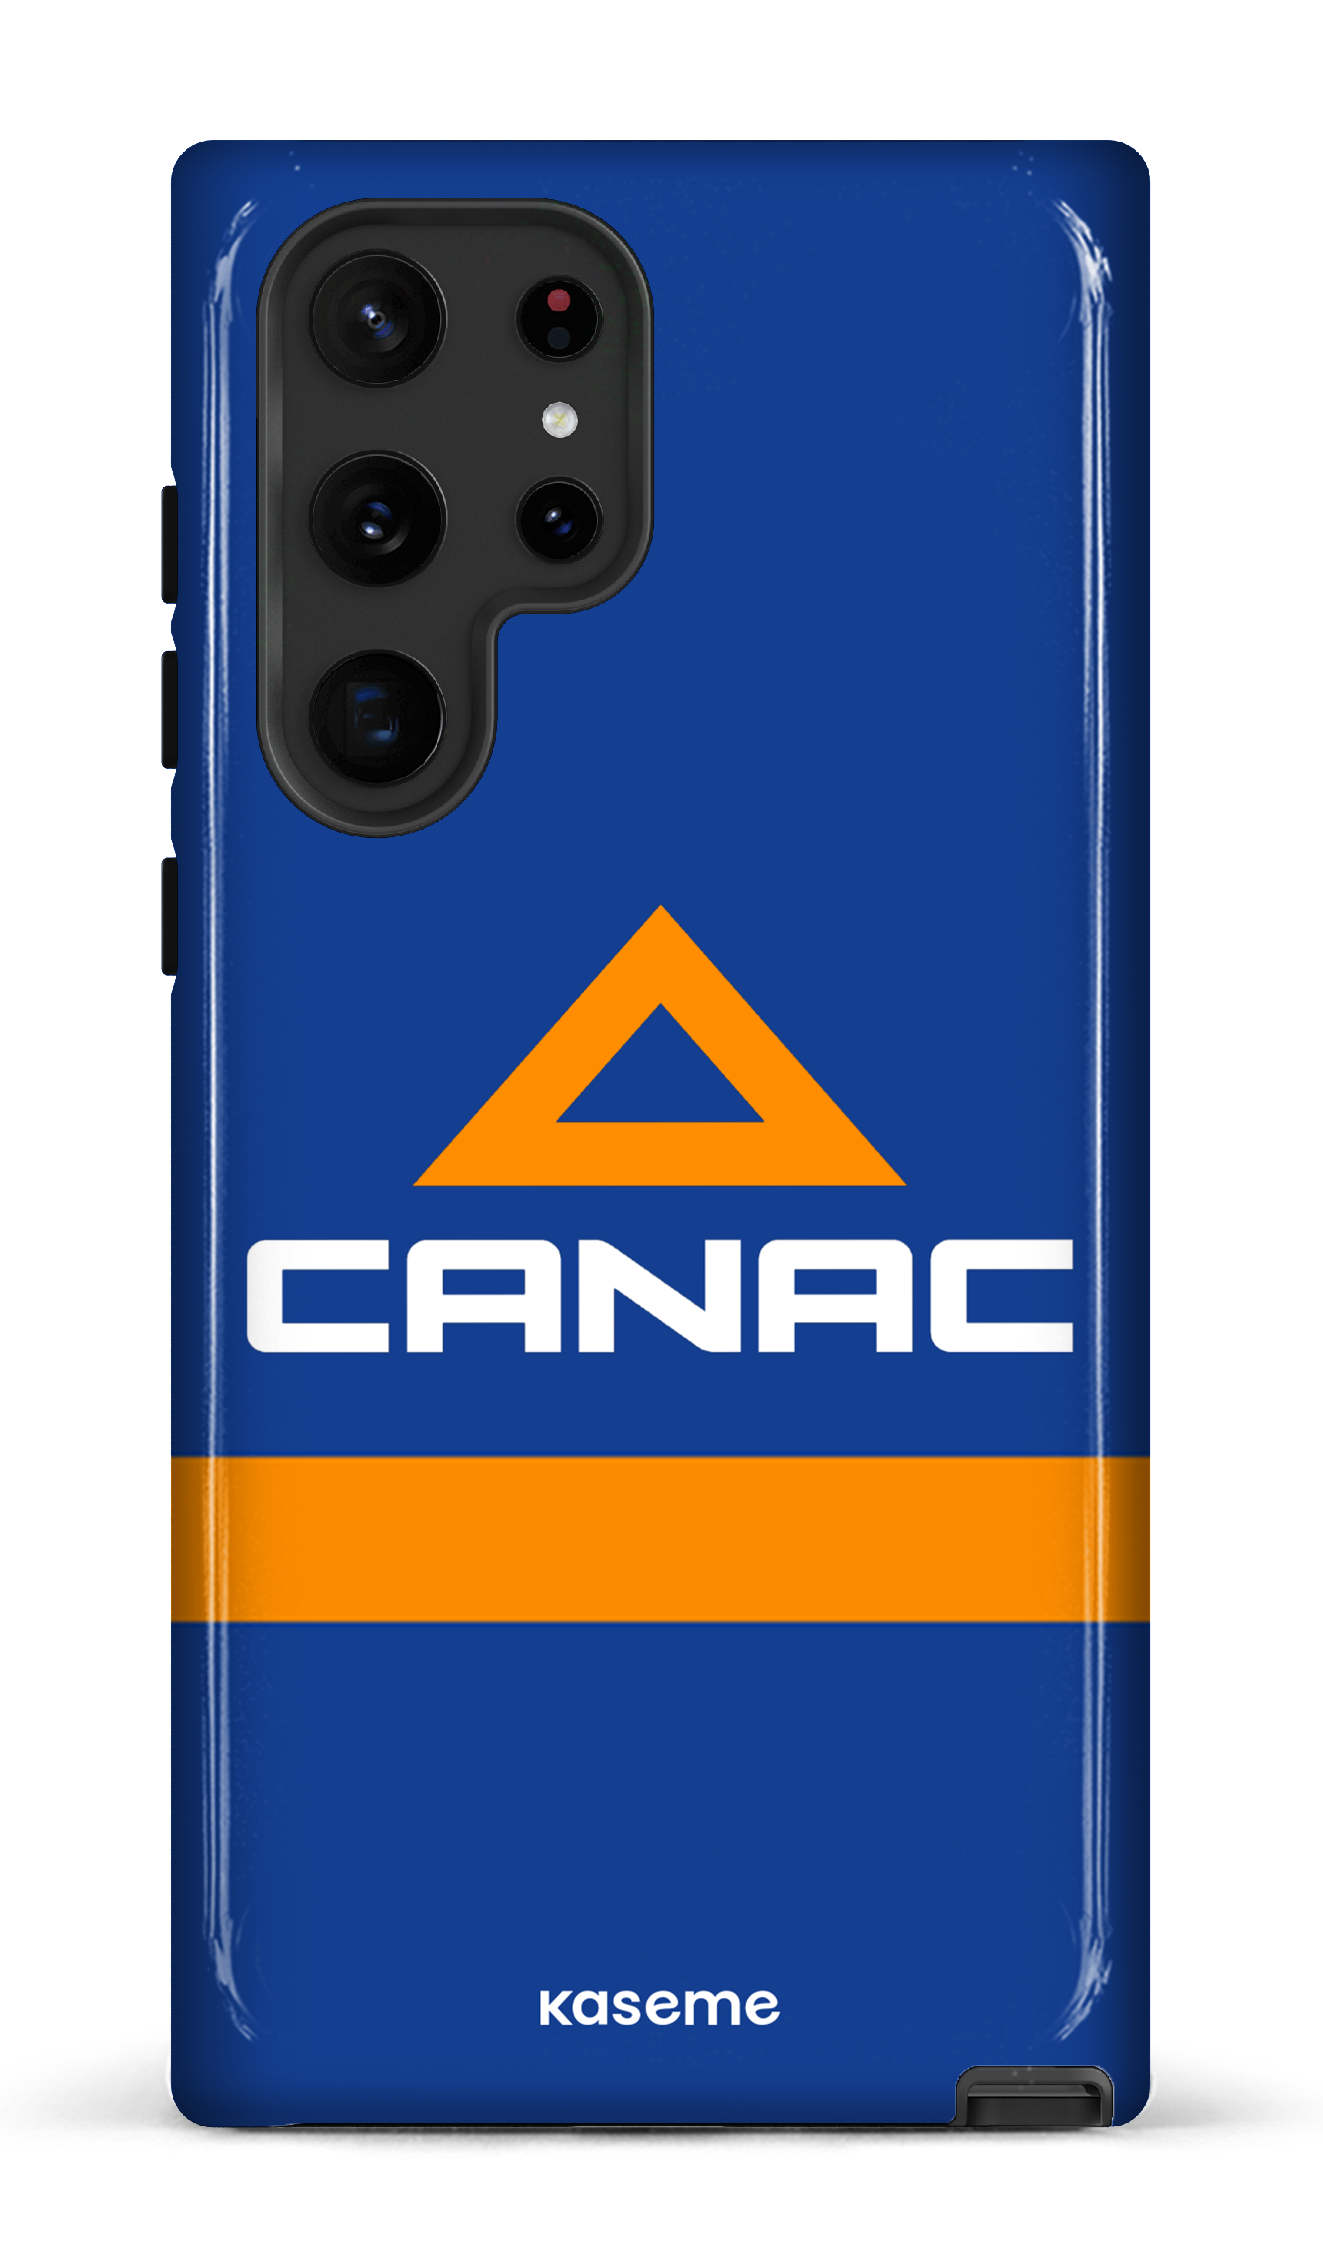 Canac - Galaxy S22 Ultra